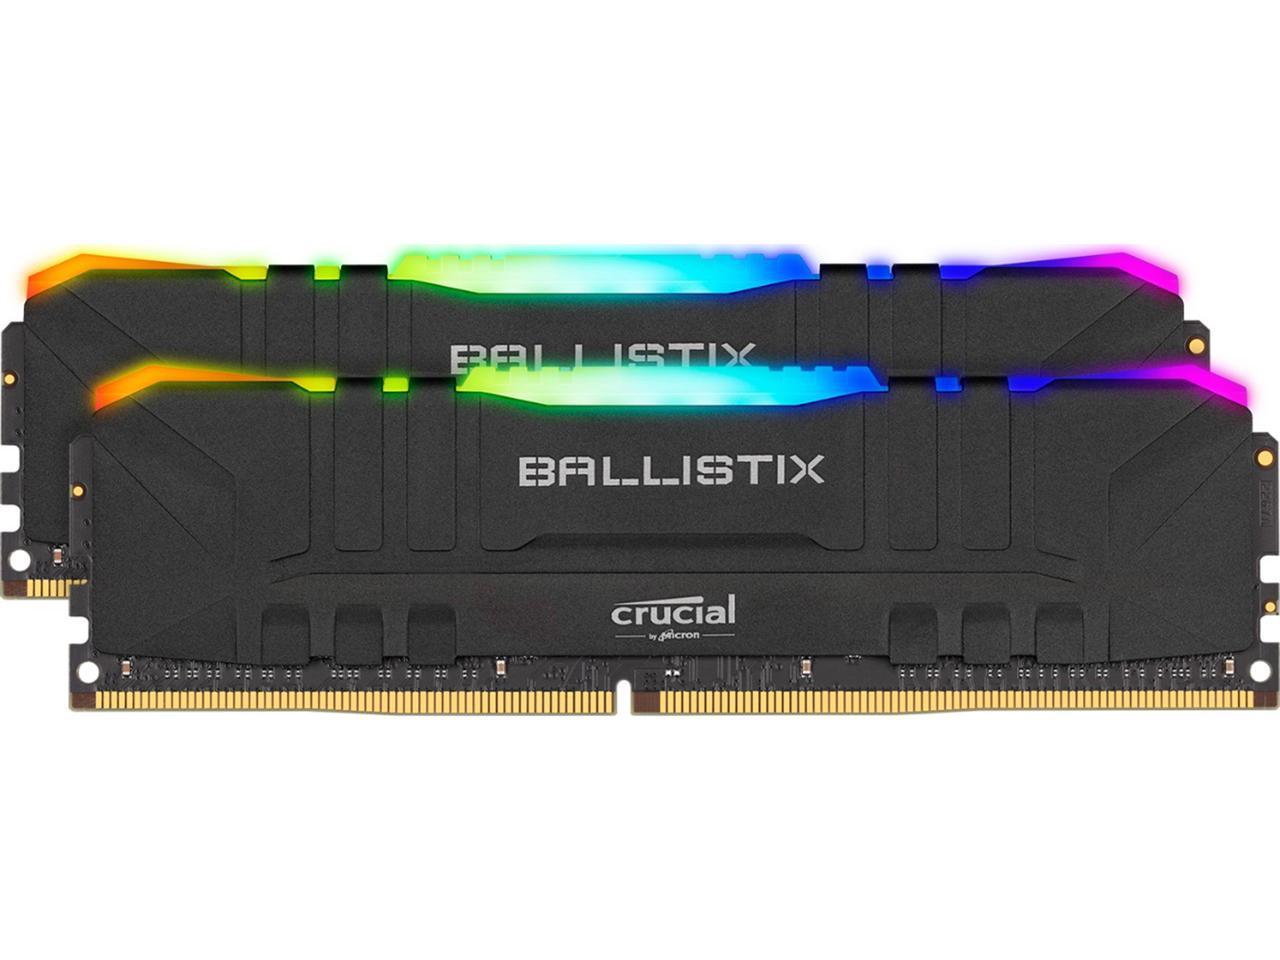 Crucial Ballistix RGB 32GB (2 x 16GB) 288-Pin DDR4 SDRAM DDR4 3000 (PC4 24000) Desktop Memory Model BL2K16G30C15U4BL